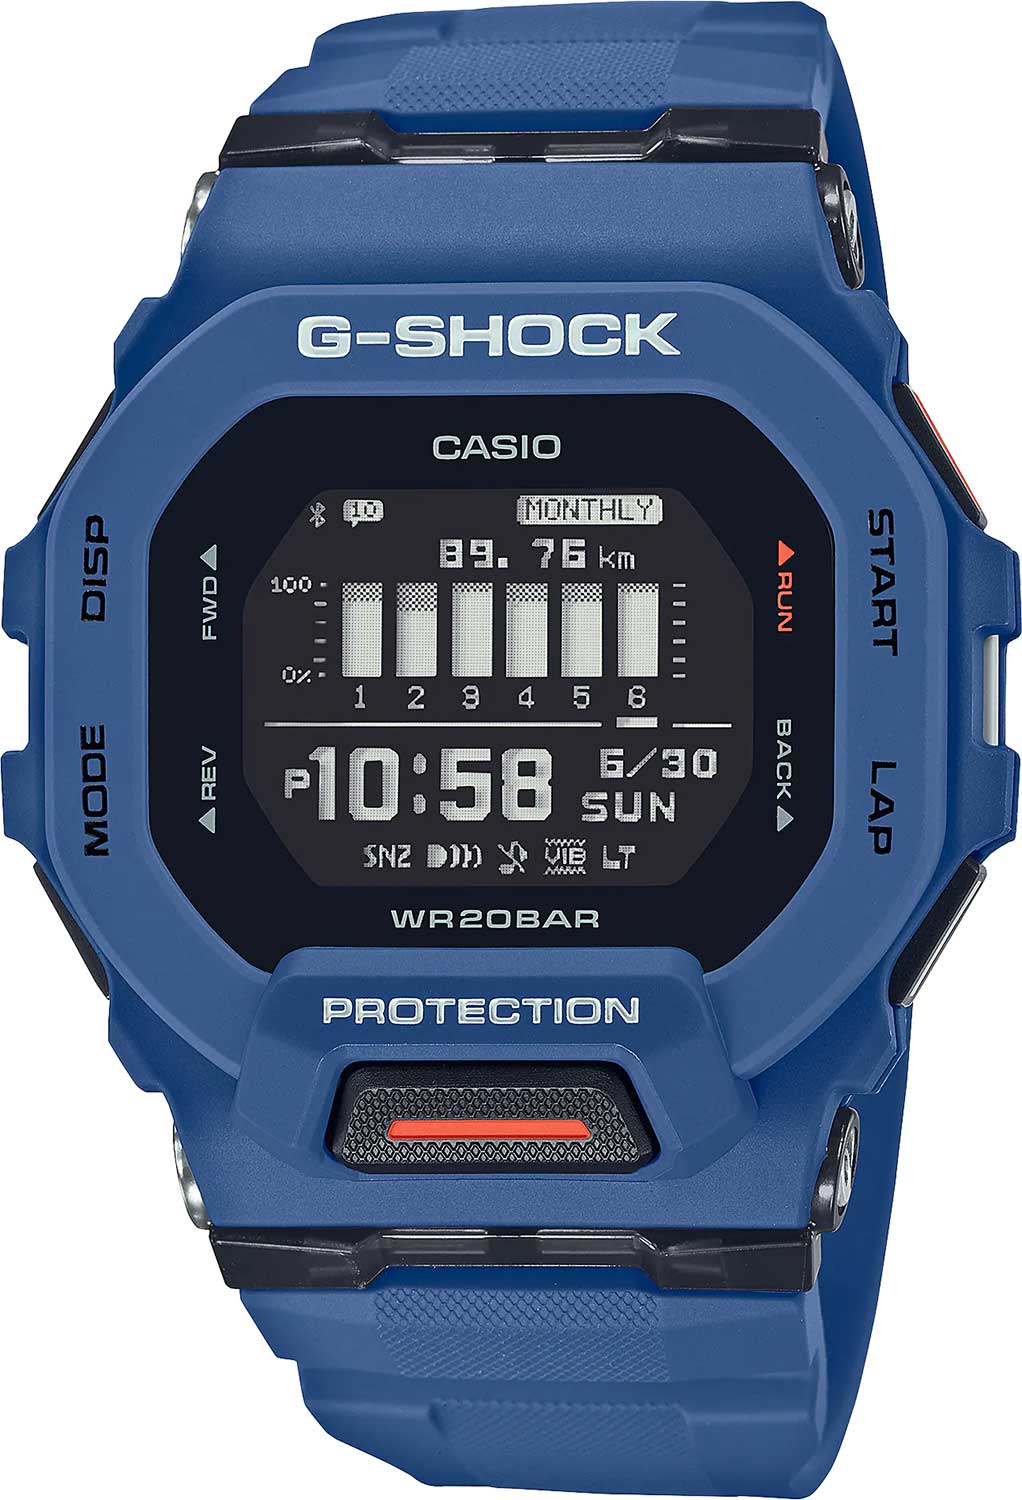     Casio G-SHOCK GBD-200-2ER  